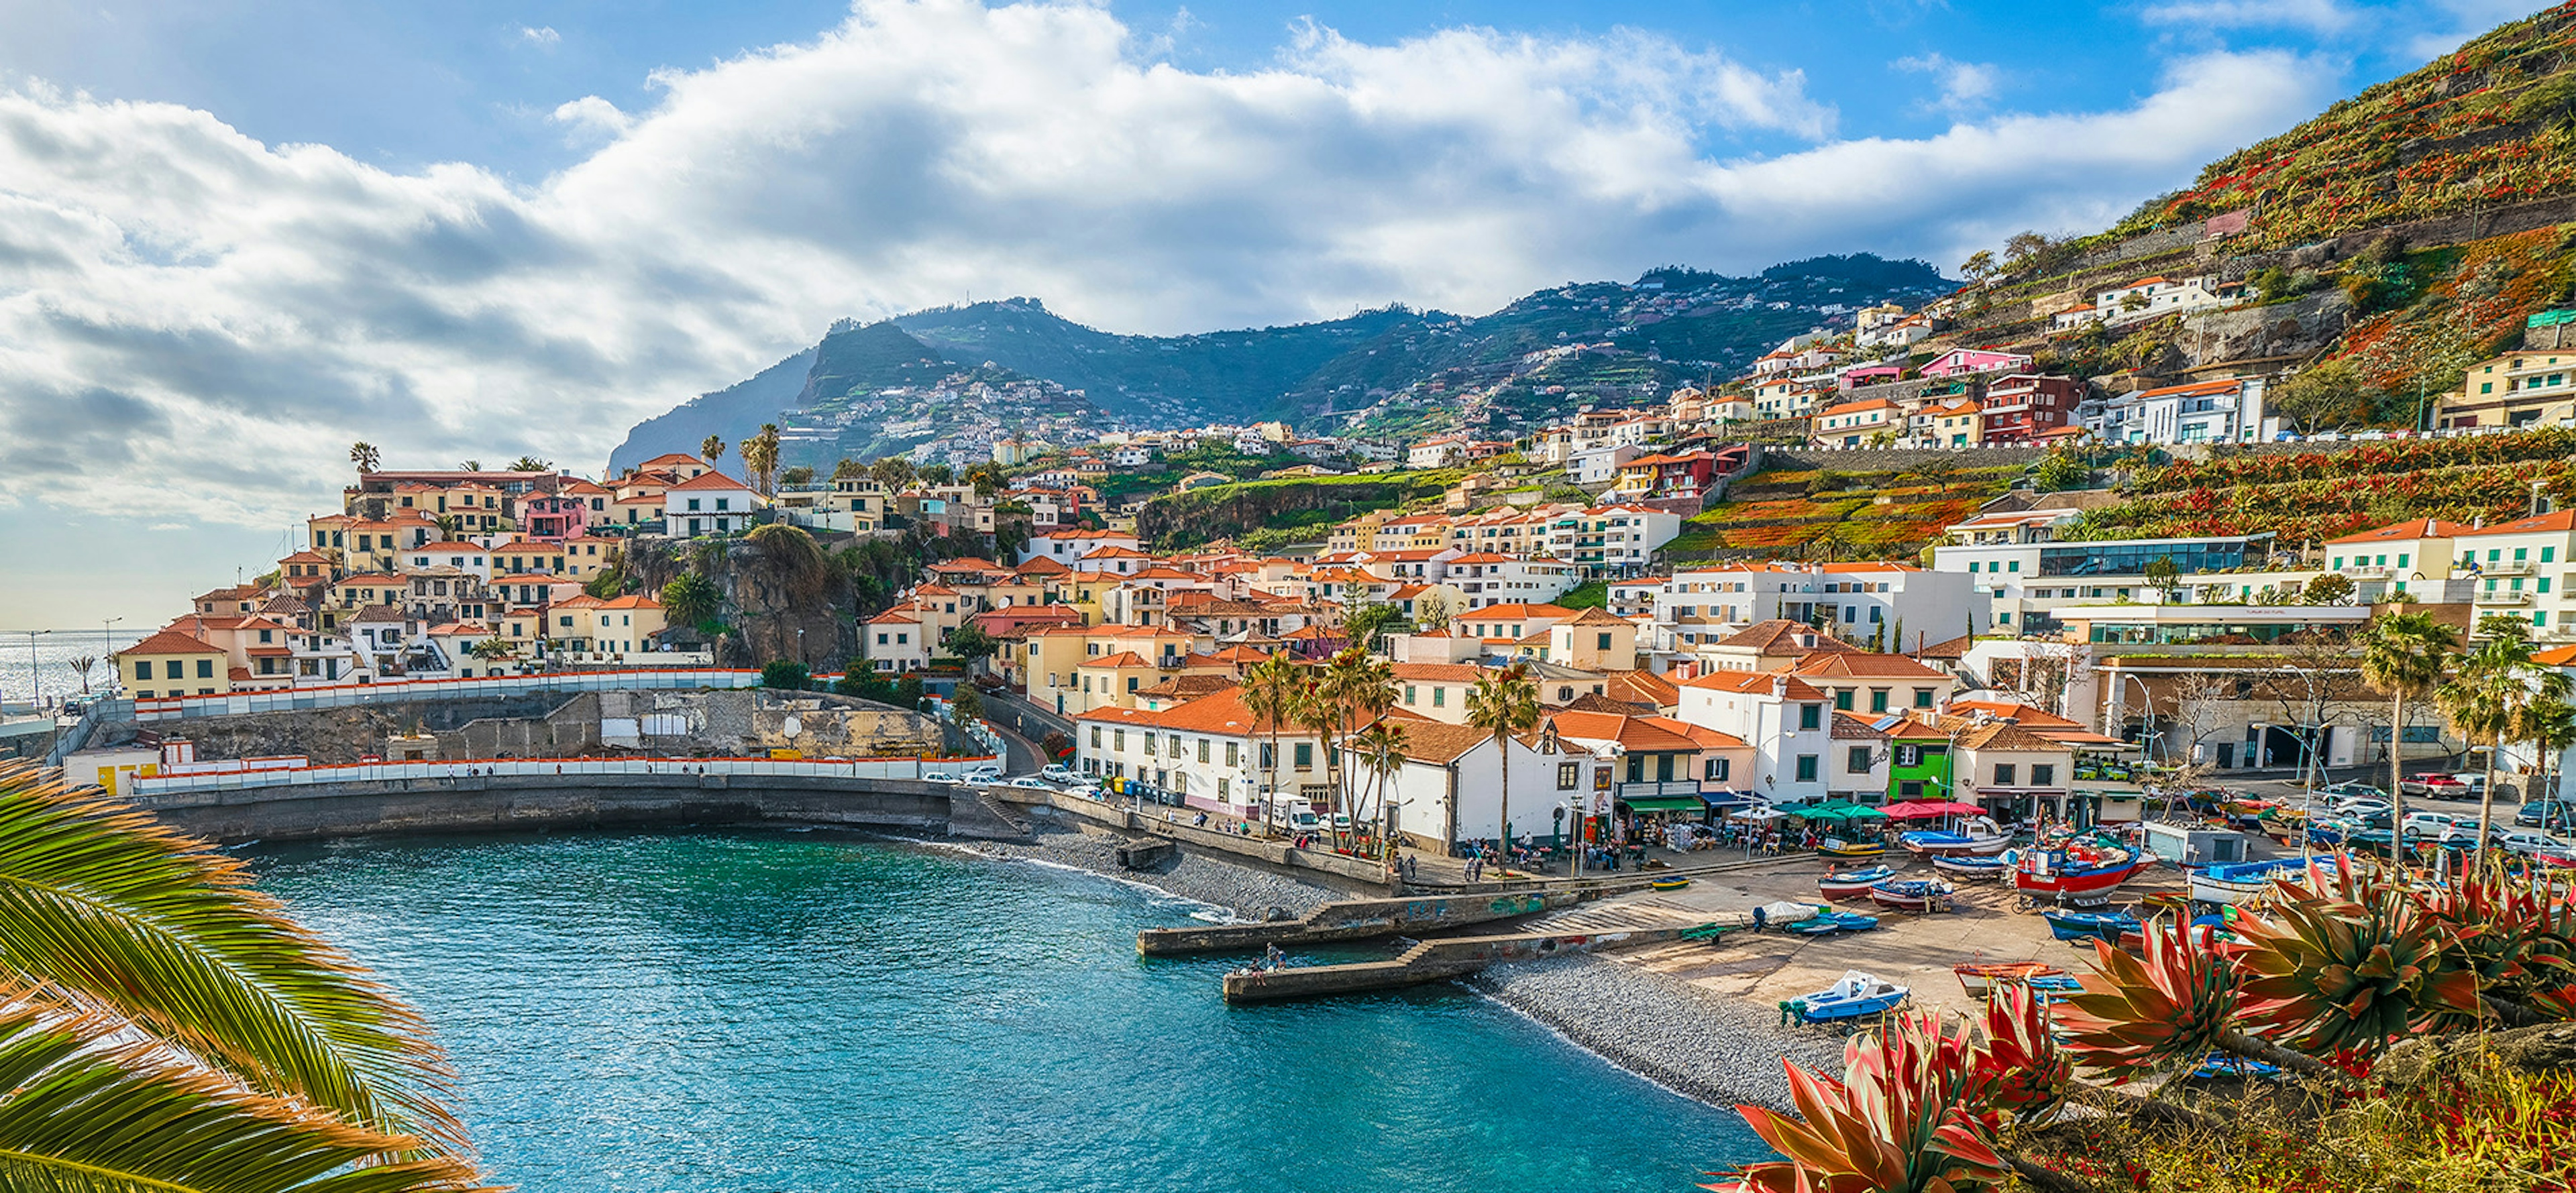 A beautiful image of Madeira